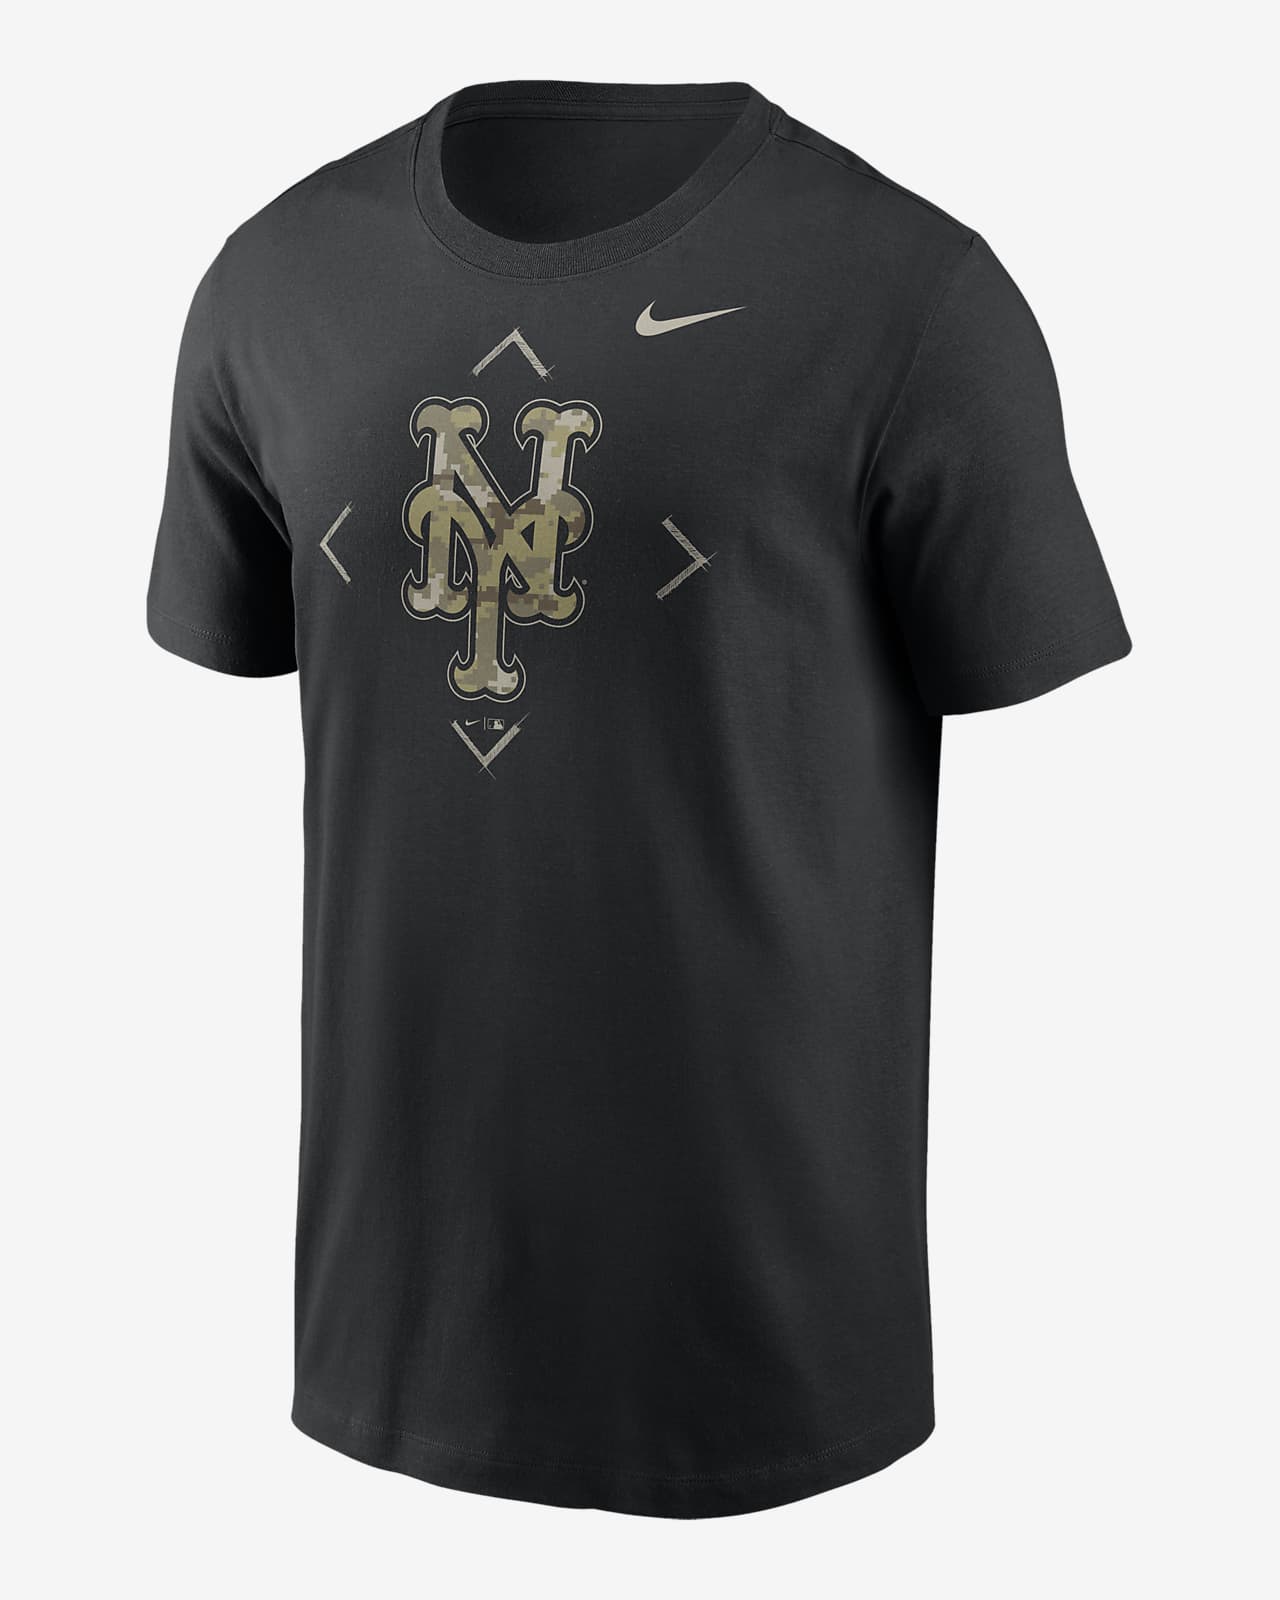 Nike Camo Logo (MLB Colorado Rockies) Men's T-Shirt.